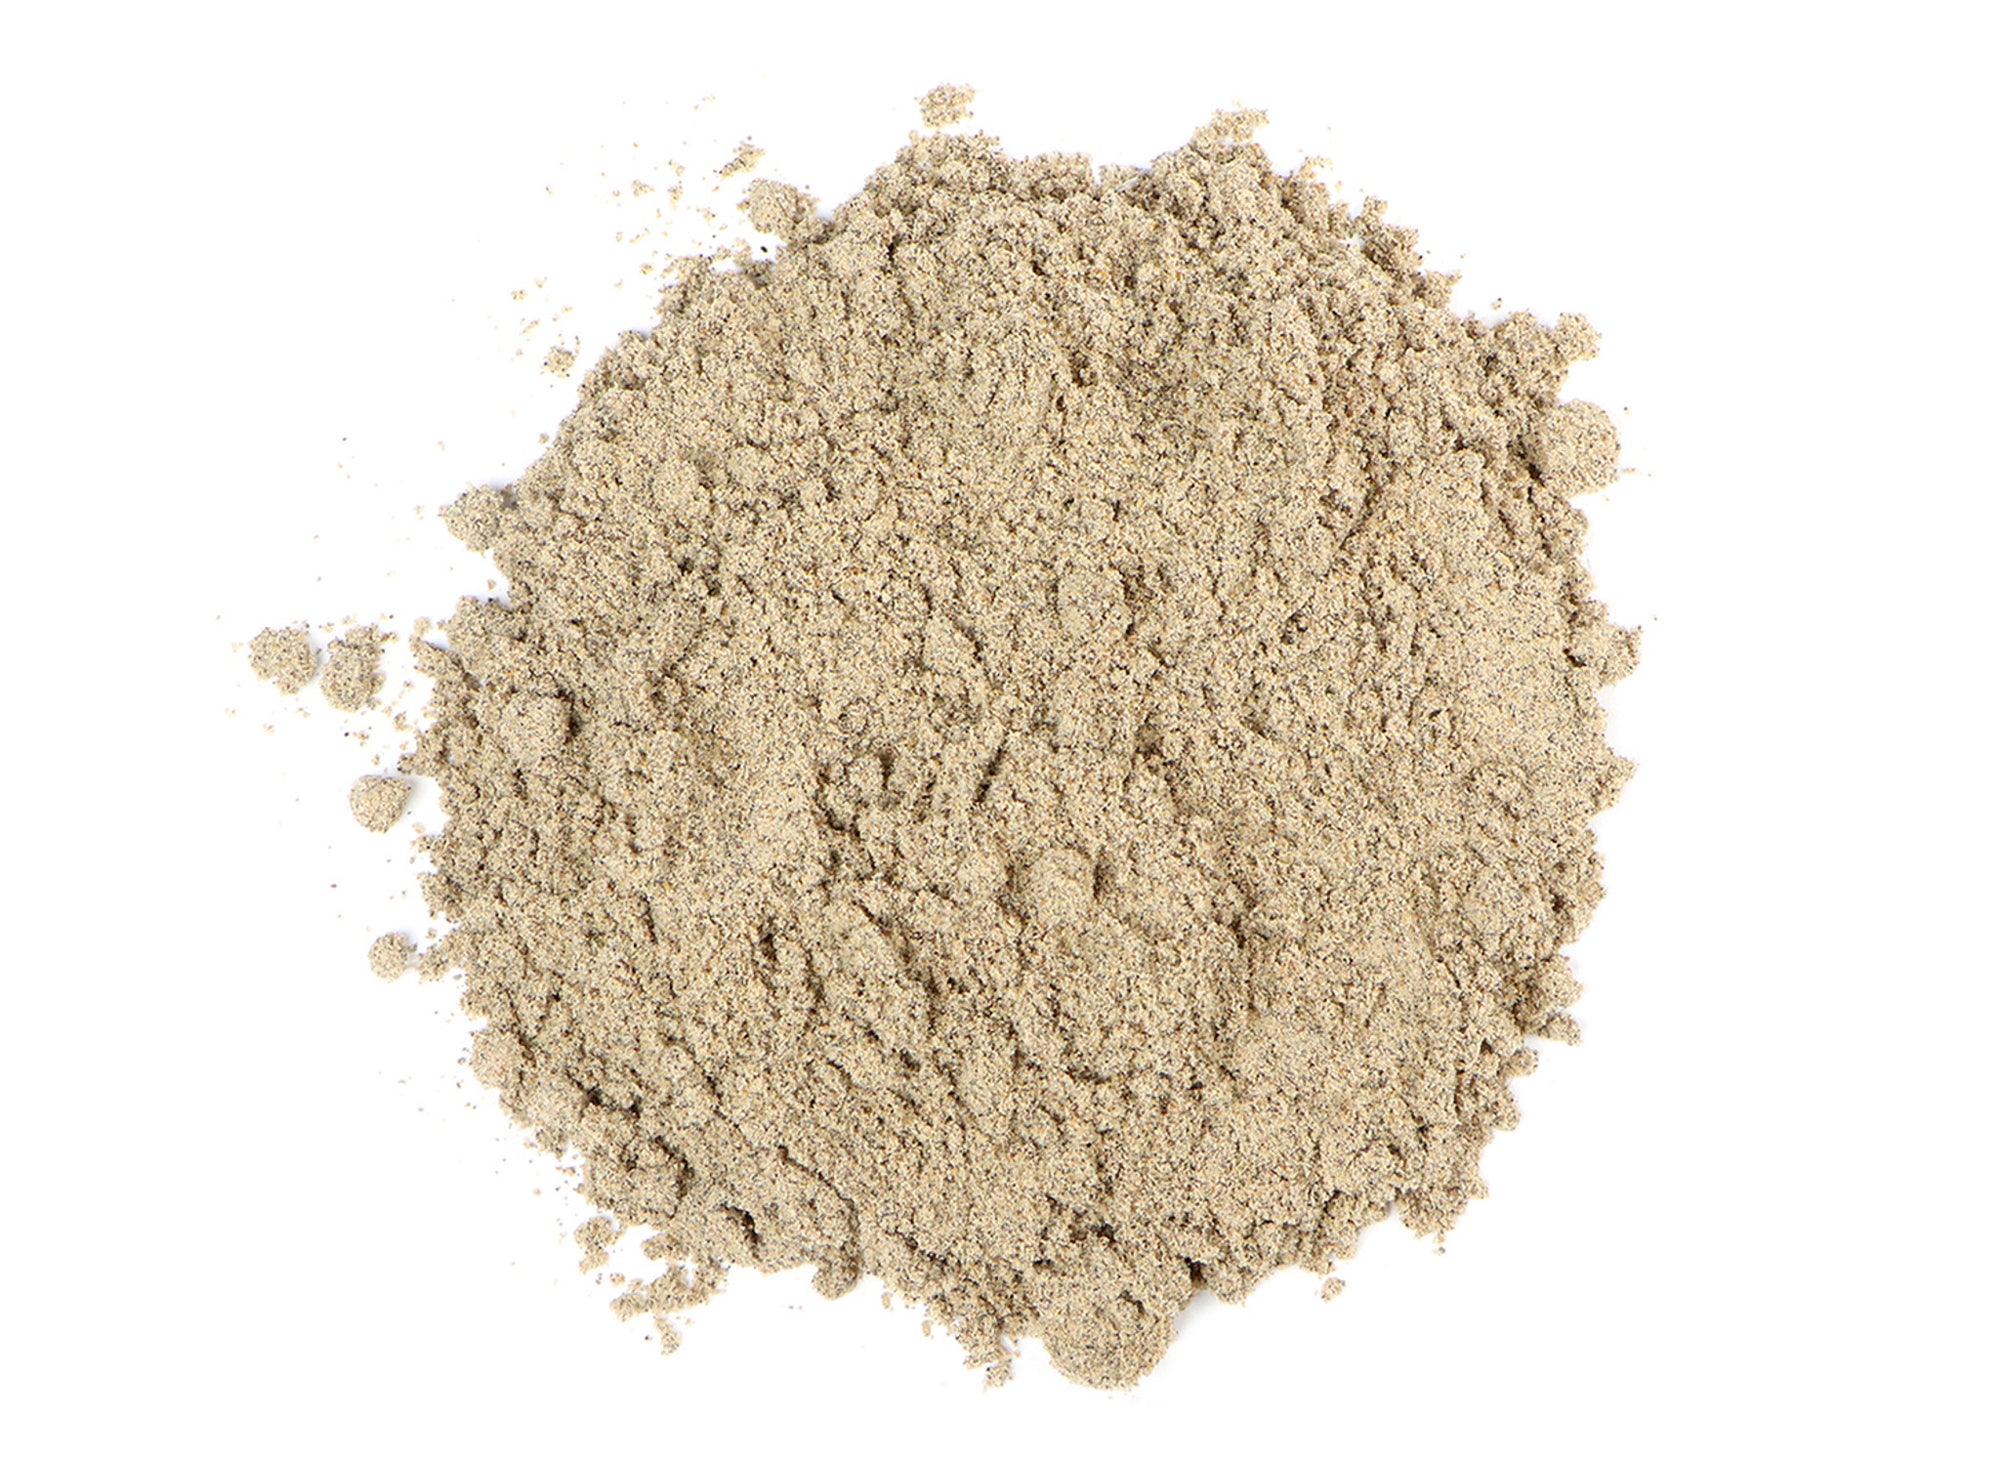 Cardamom Powder Benefits: Top Benefits of Cardamom Powder